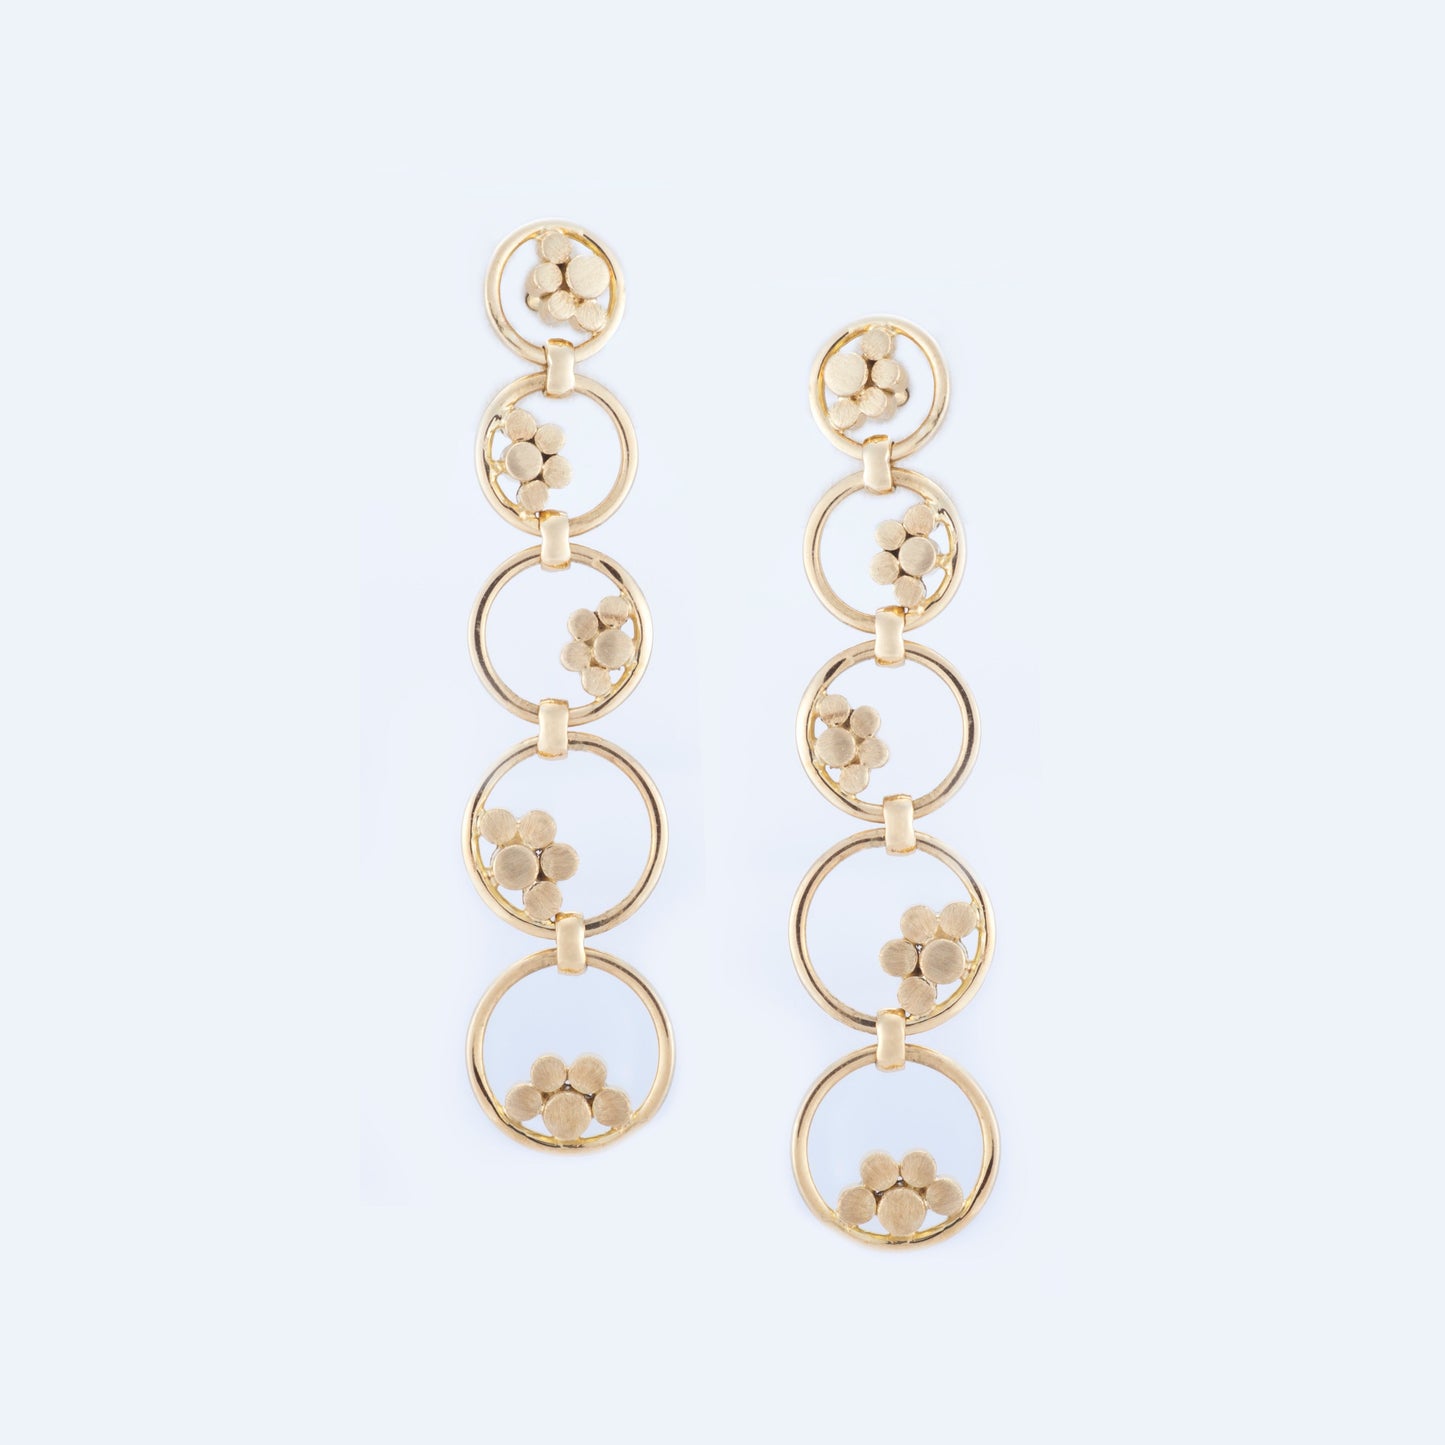 The Niyathi Gold Long Earrings by Rasvihar